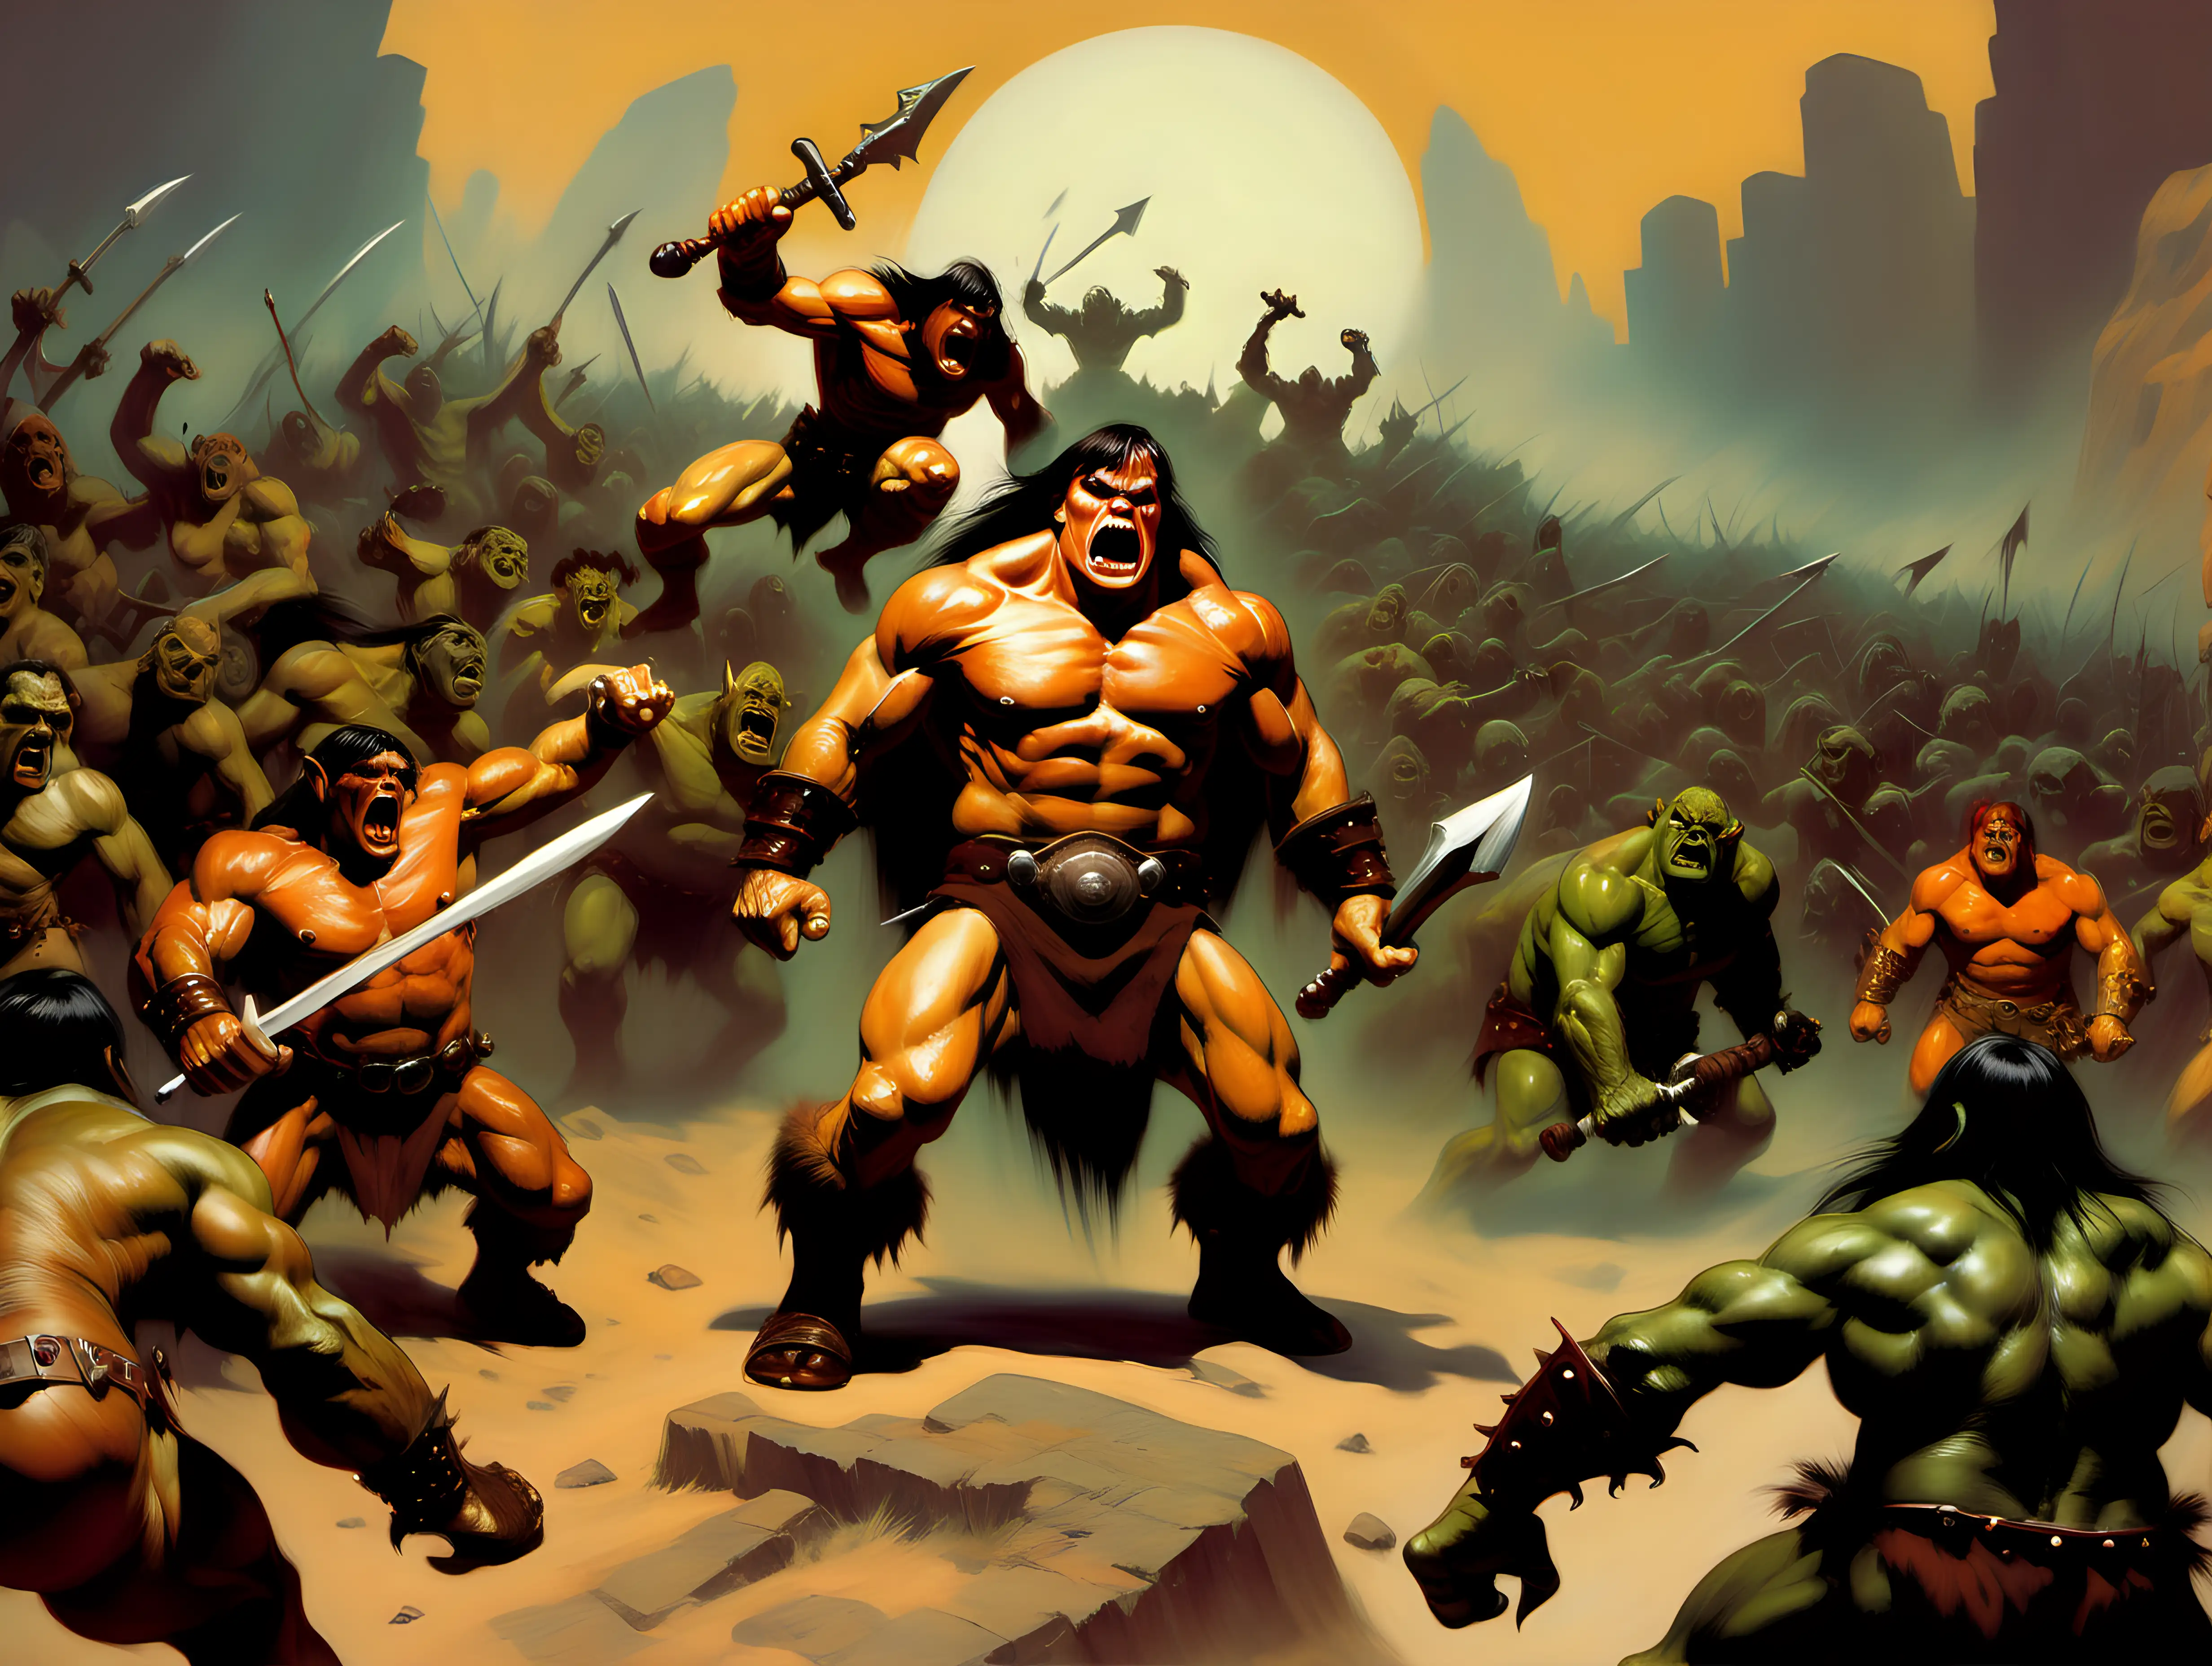 Conan Battles Ogres in Epic Frank Frazetta Style Fantasy Scene